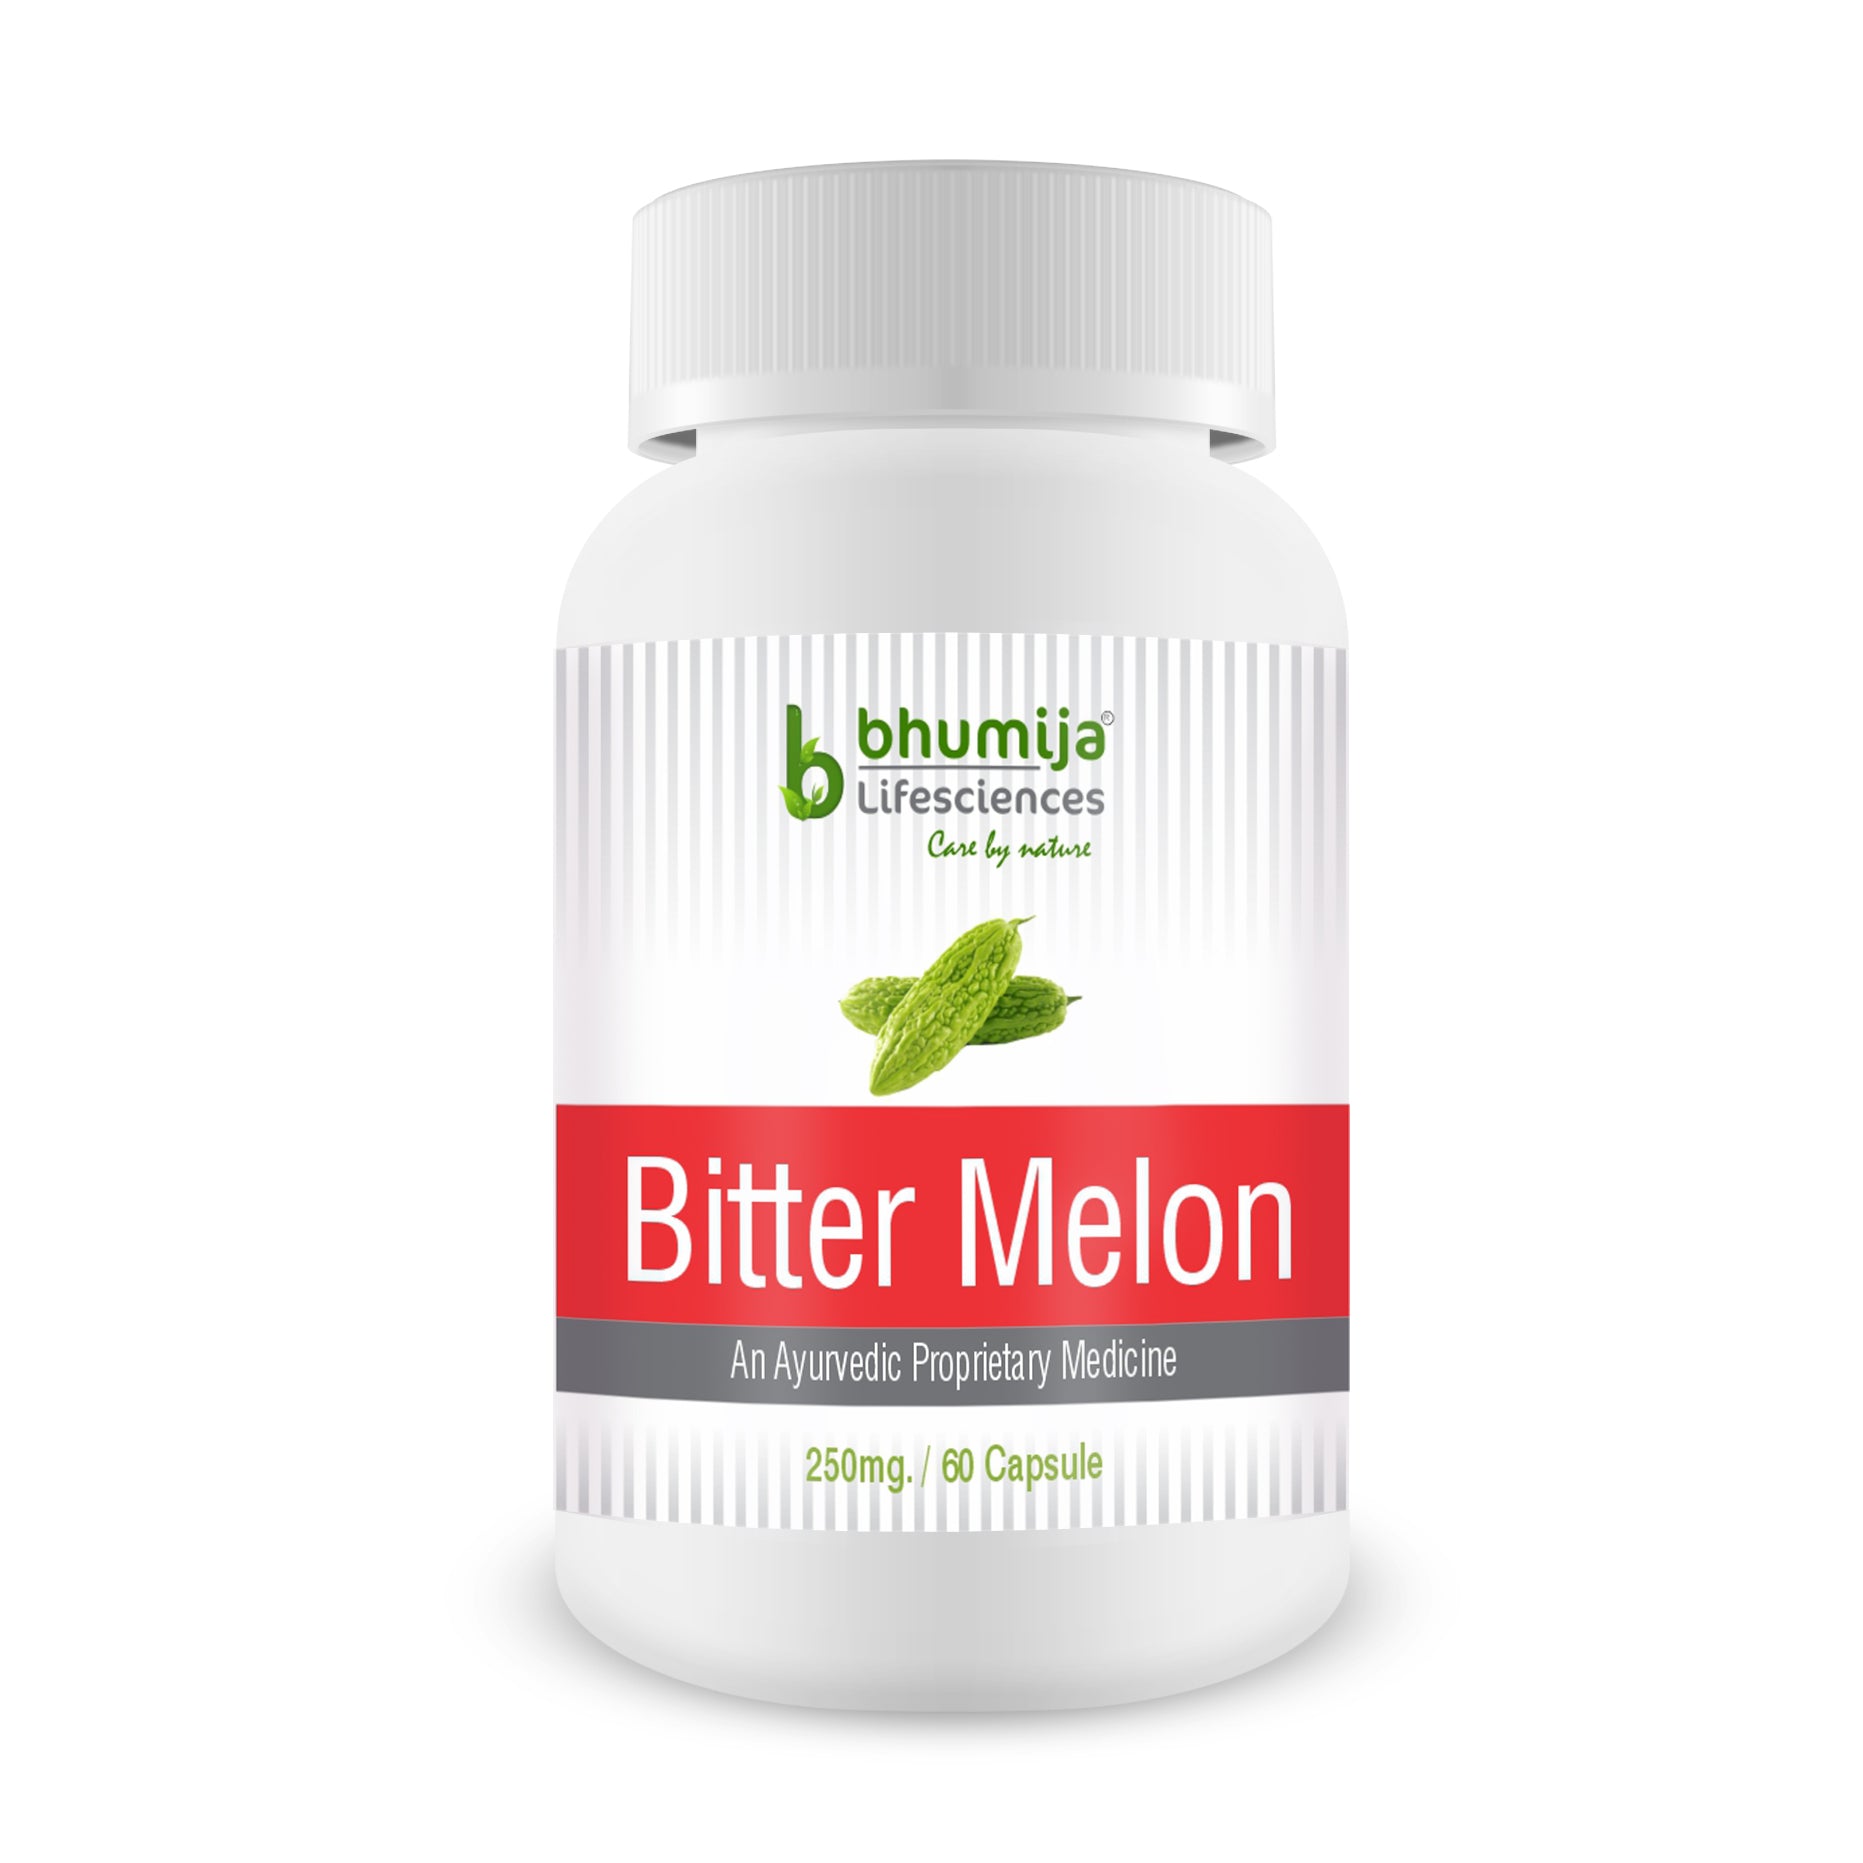 Bhumija Lifesciences Bitter Melon 60 Capsules